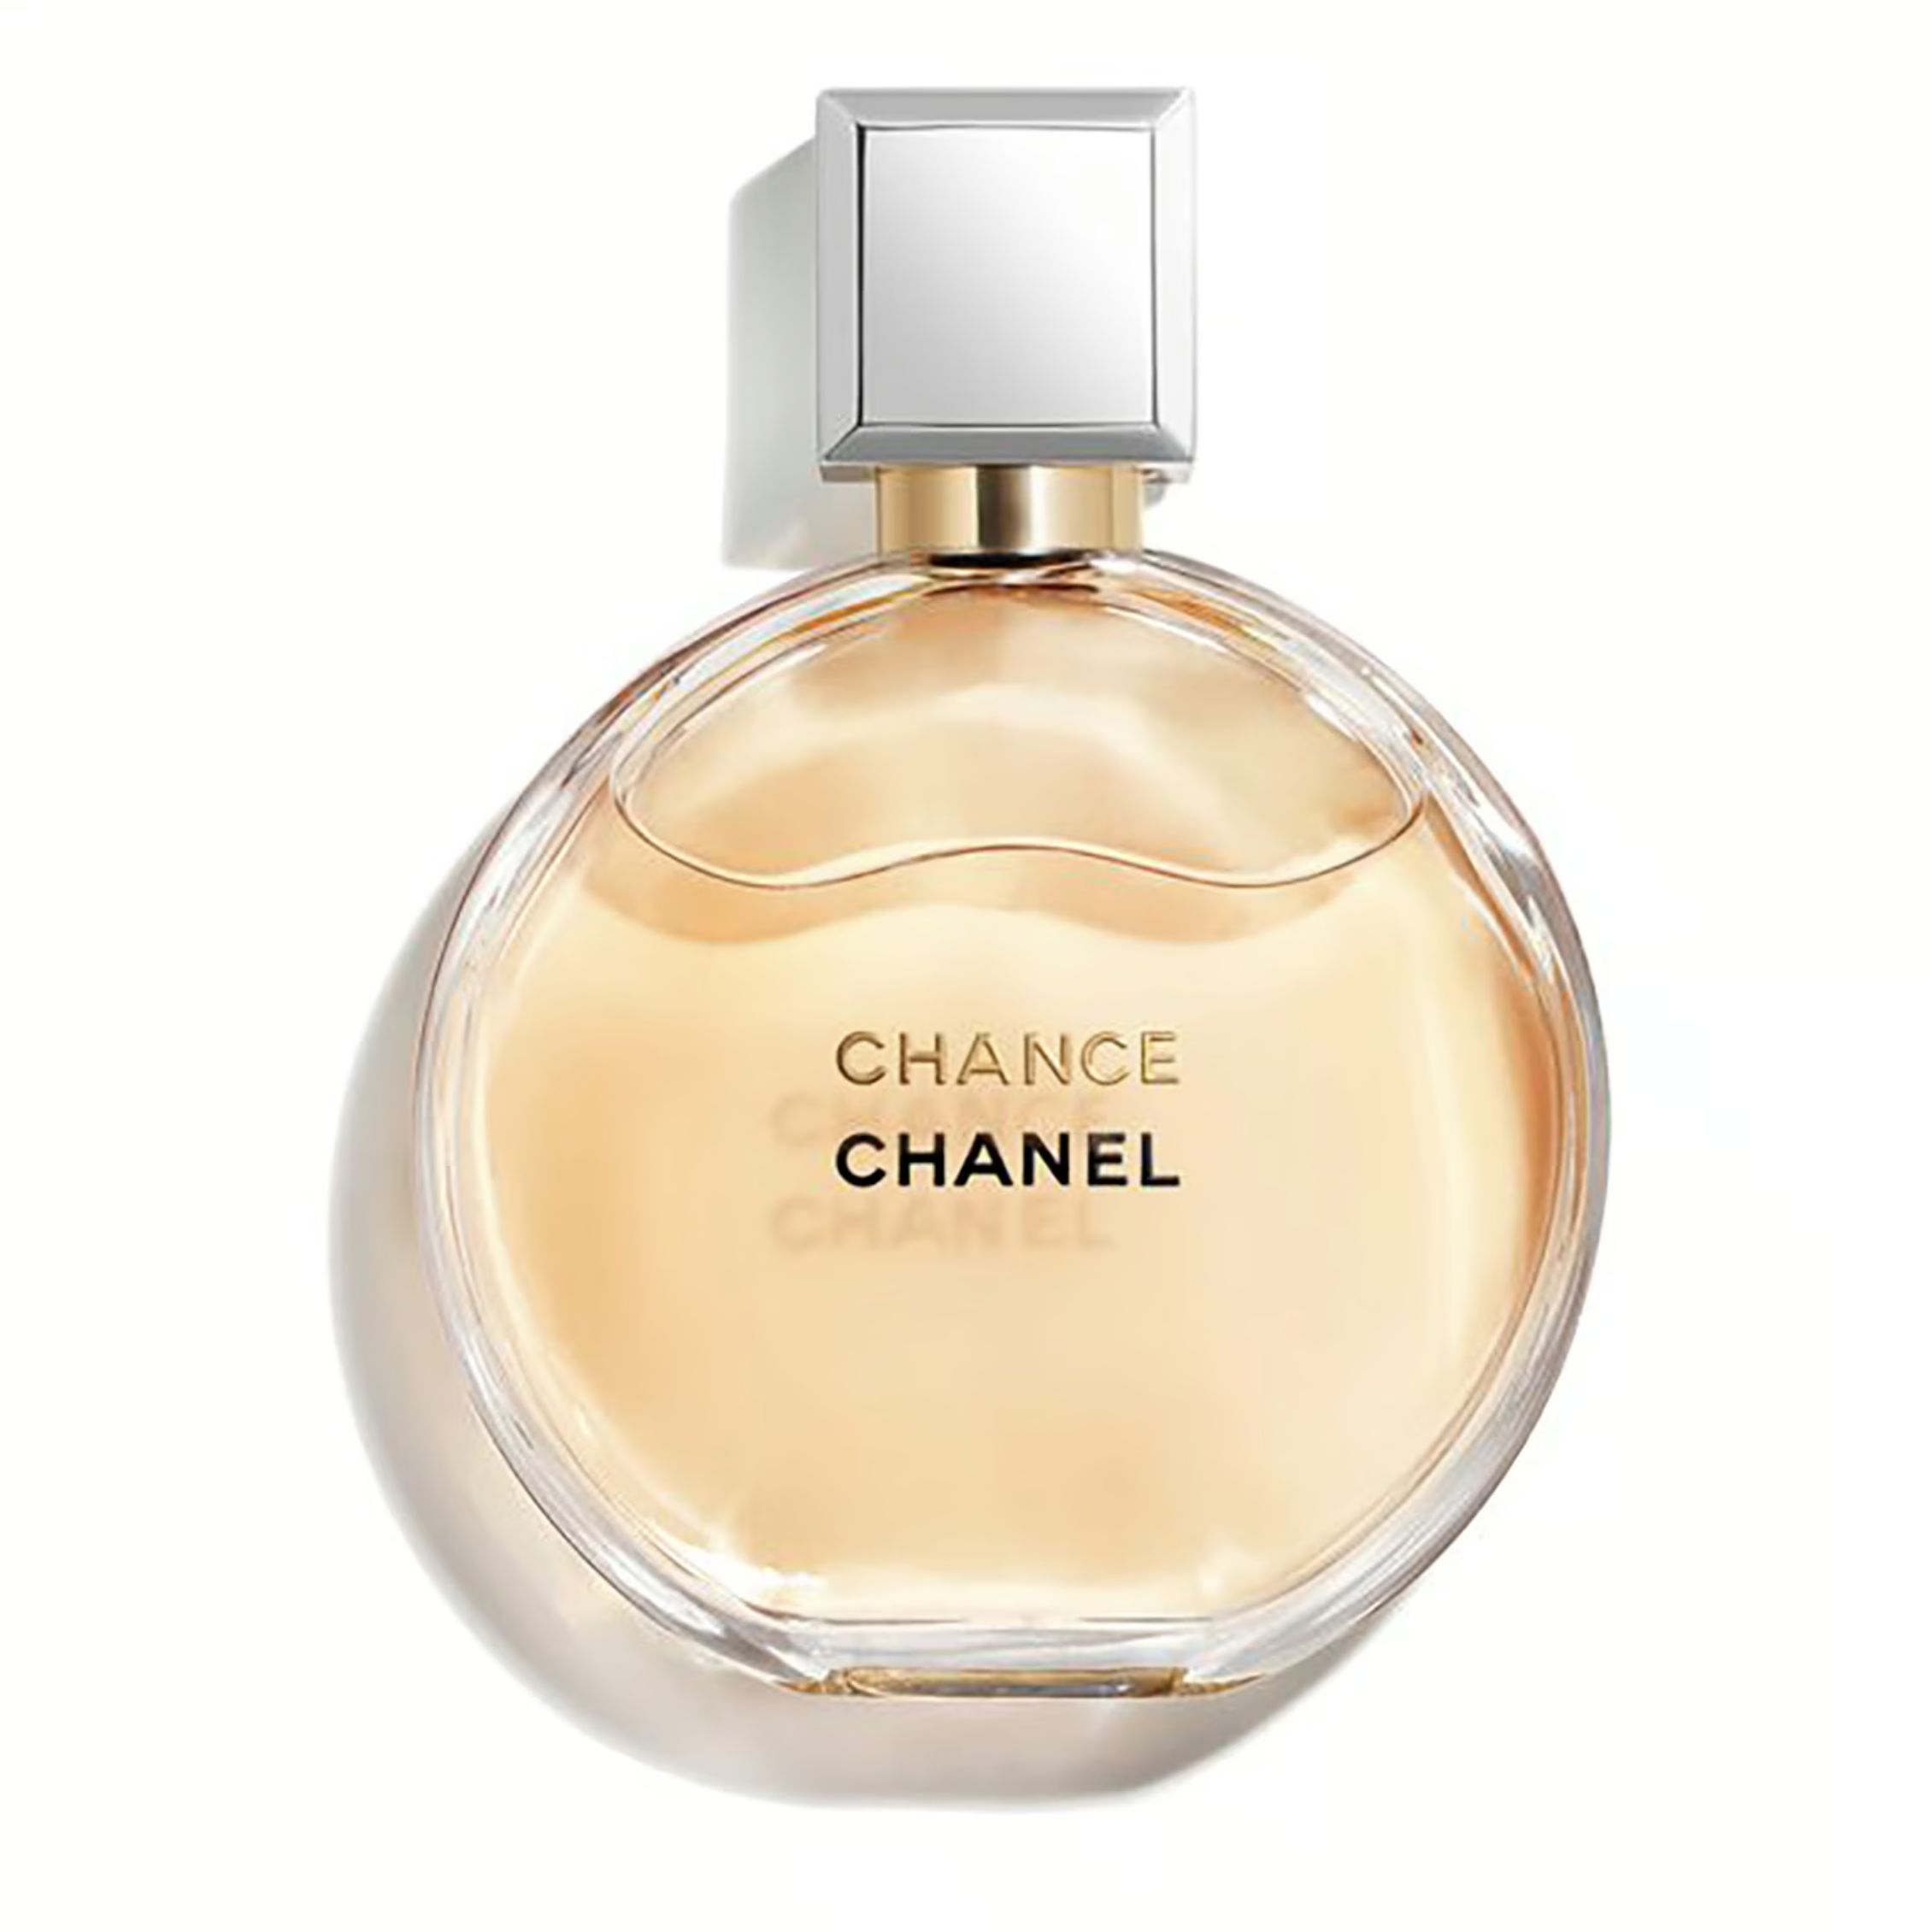 Chanel chance парфюмерная. Chanel chance w EDT 50 ml. Шанель шанс Eau de Parfum. Chanel chance EDP. Духи Шанель 100 мл.